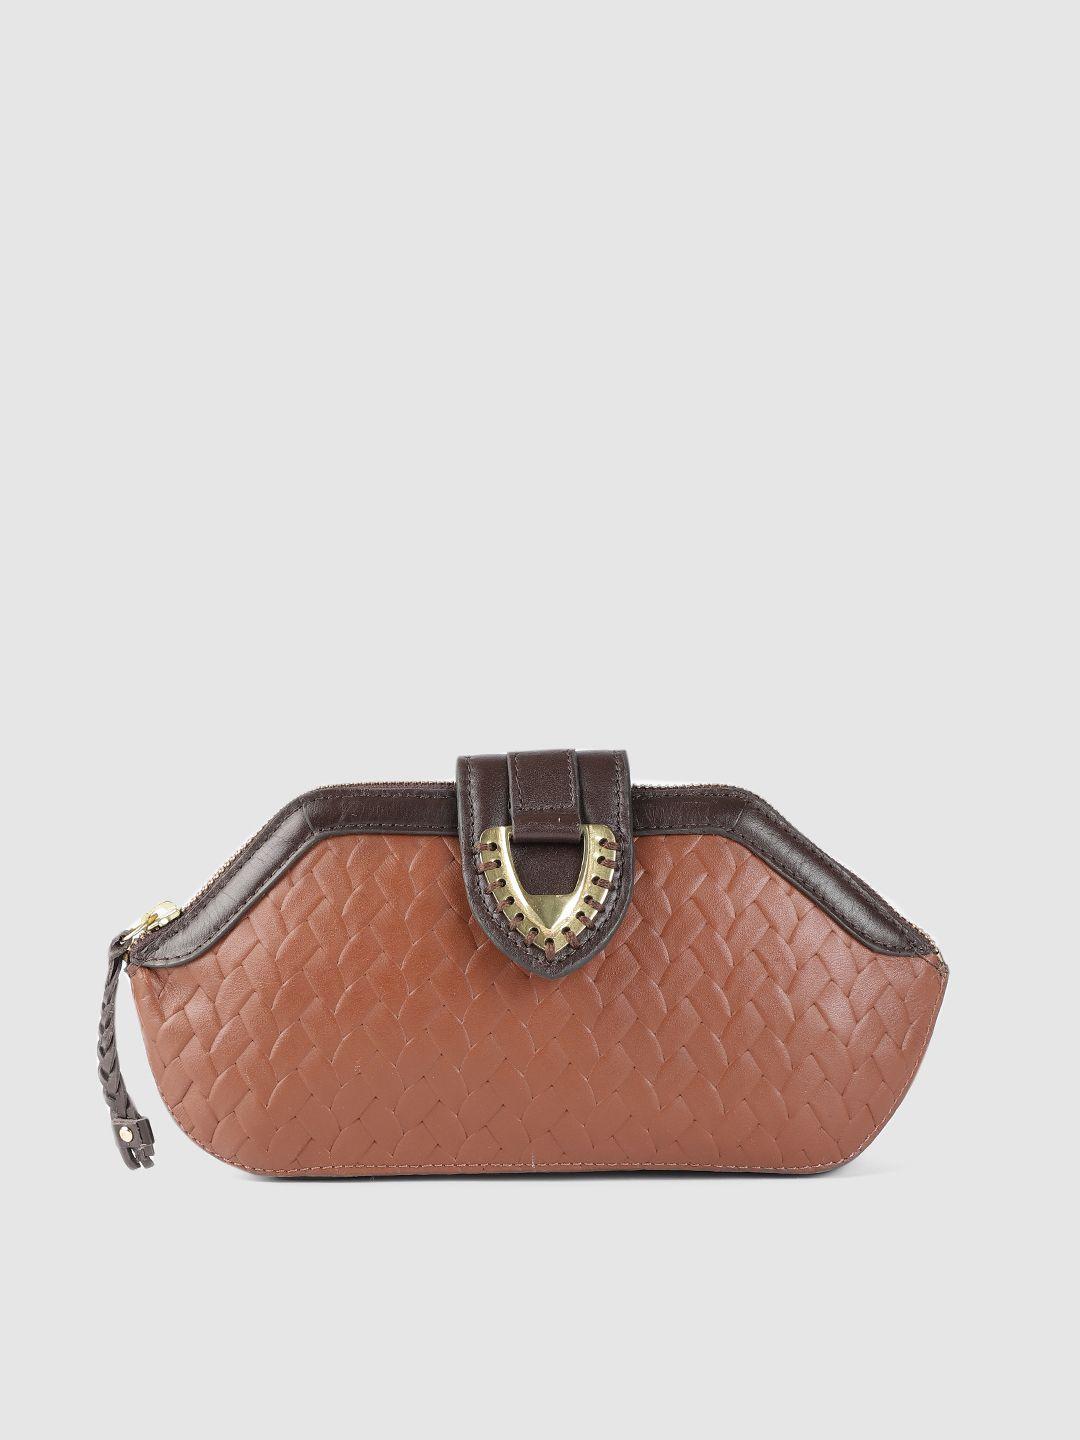 hidesign-tan-brown-textured-liya-w1-leather-purse-clutch